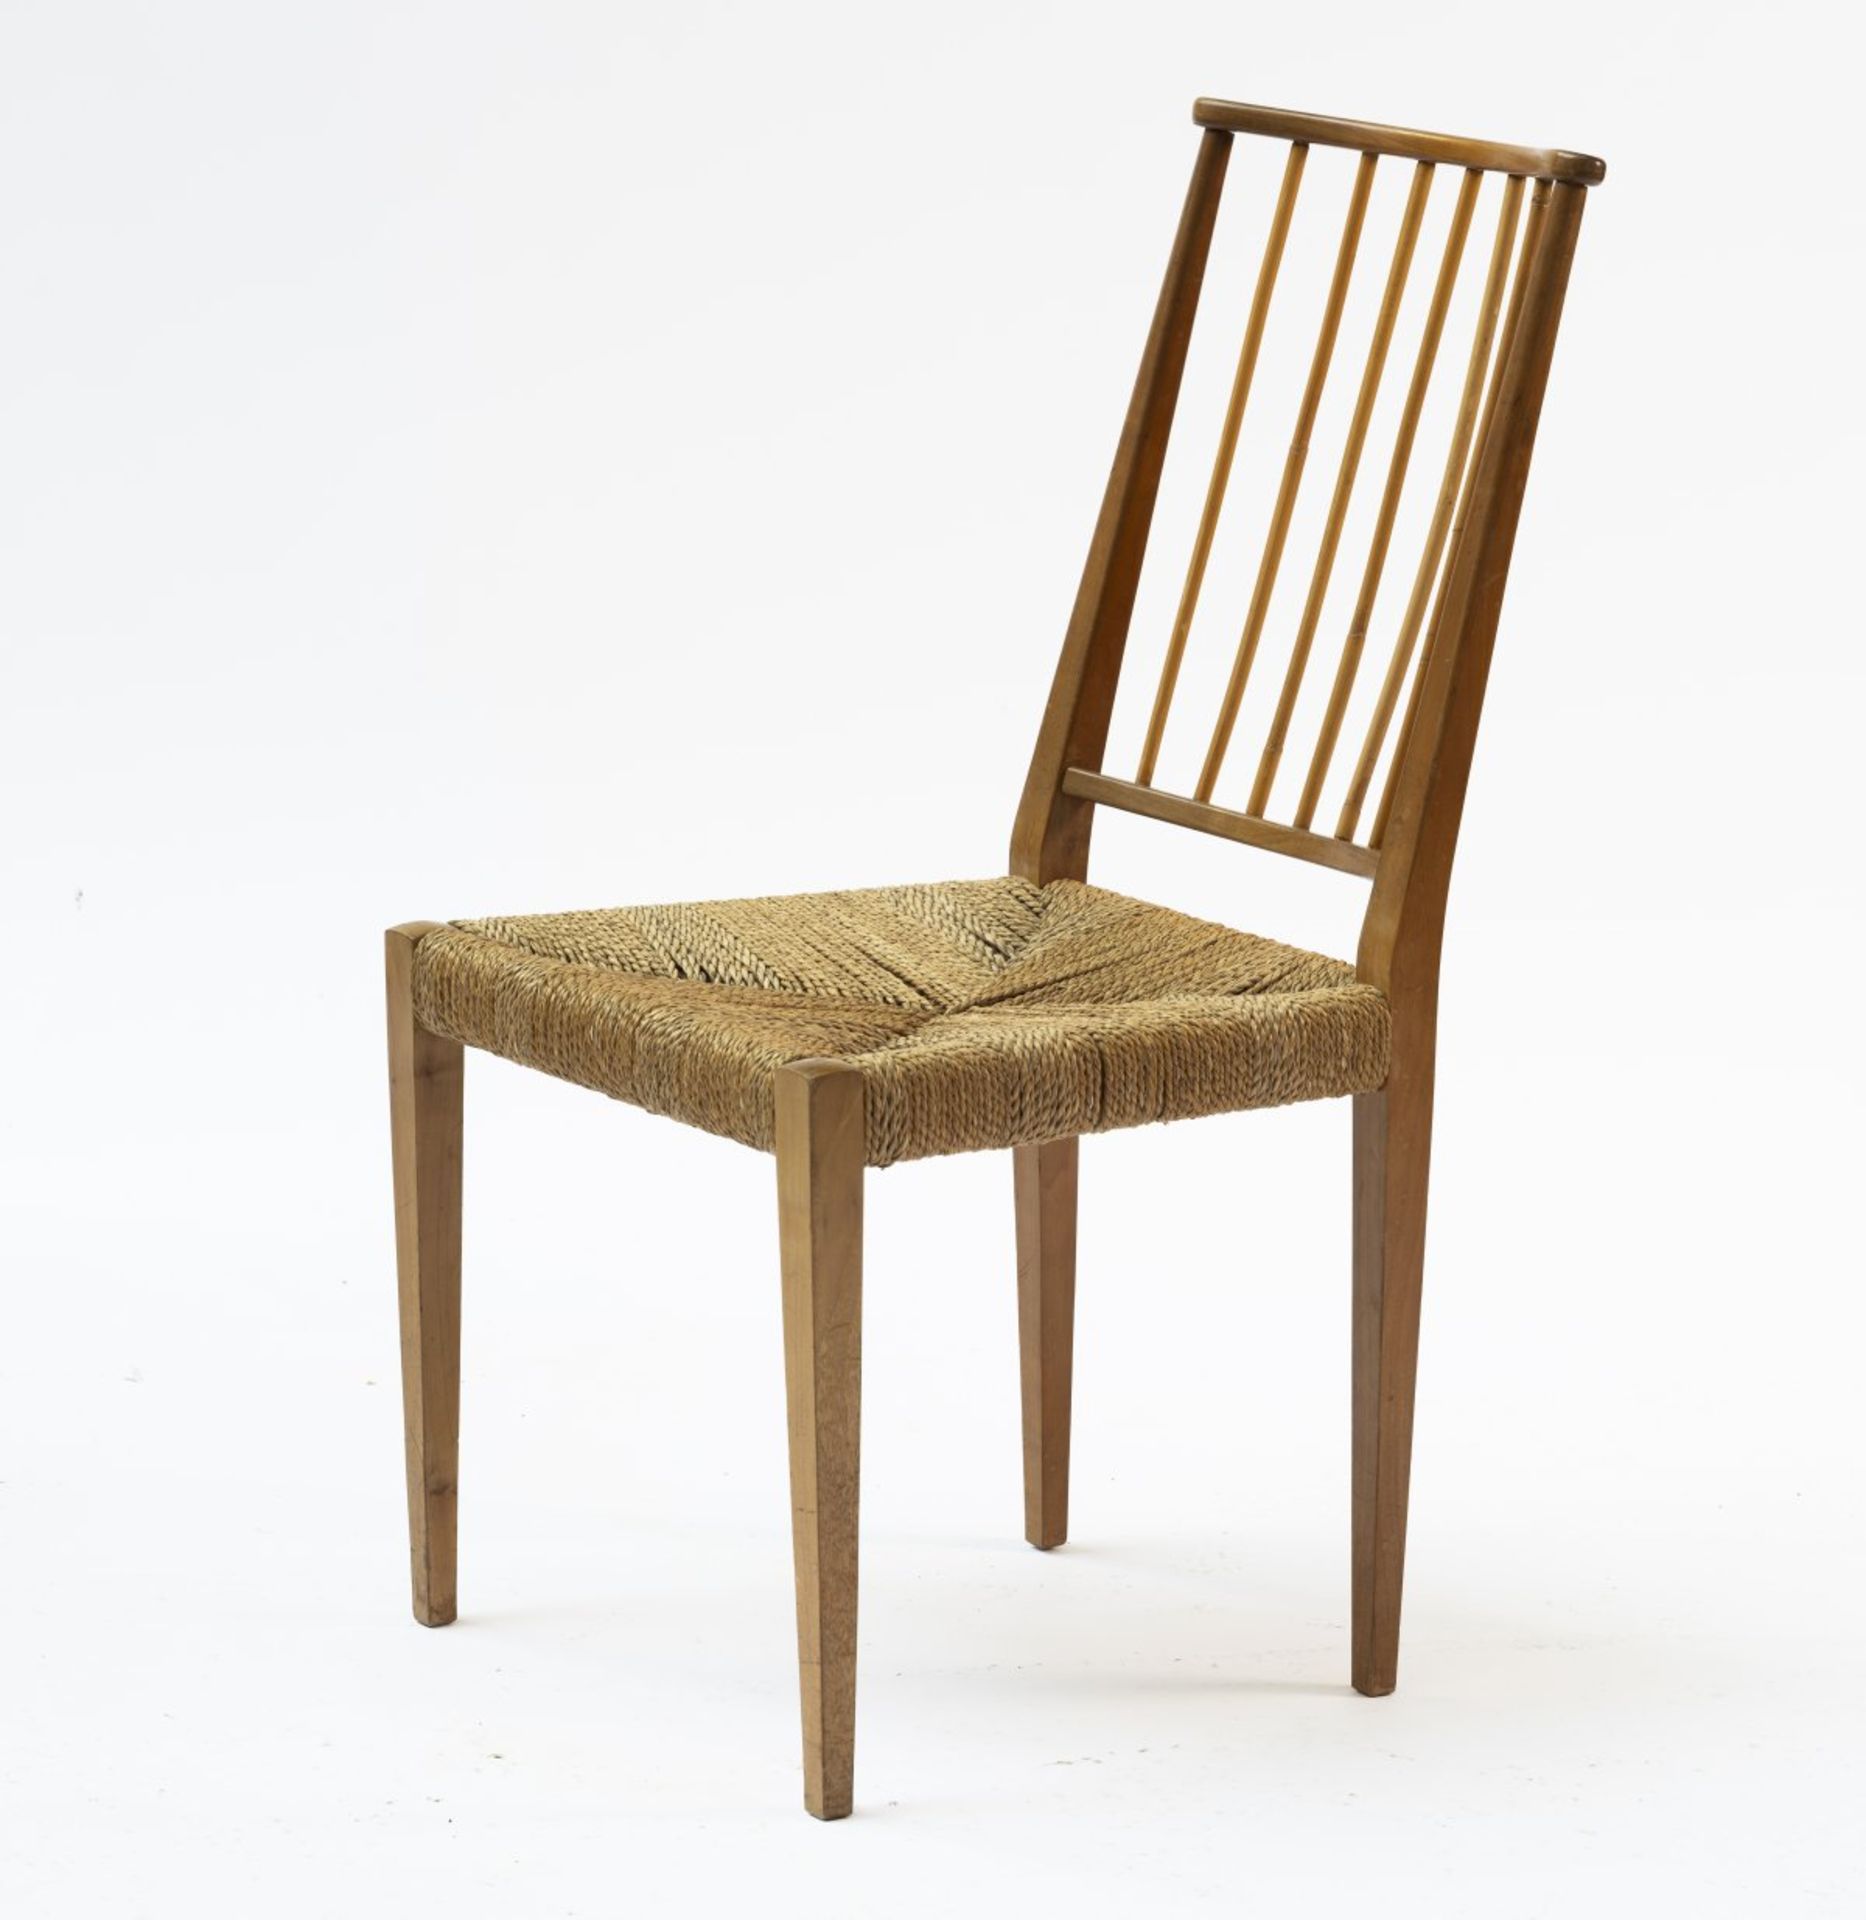 Josef Frank, 'Type B' chair, 1927